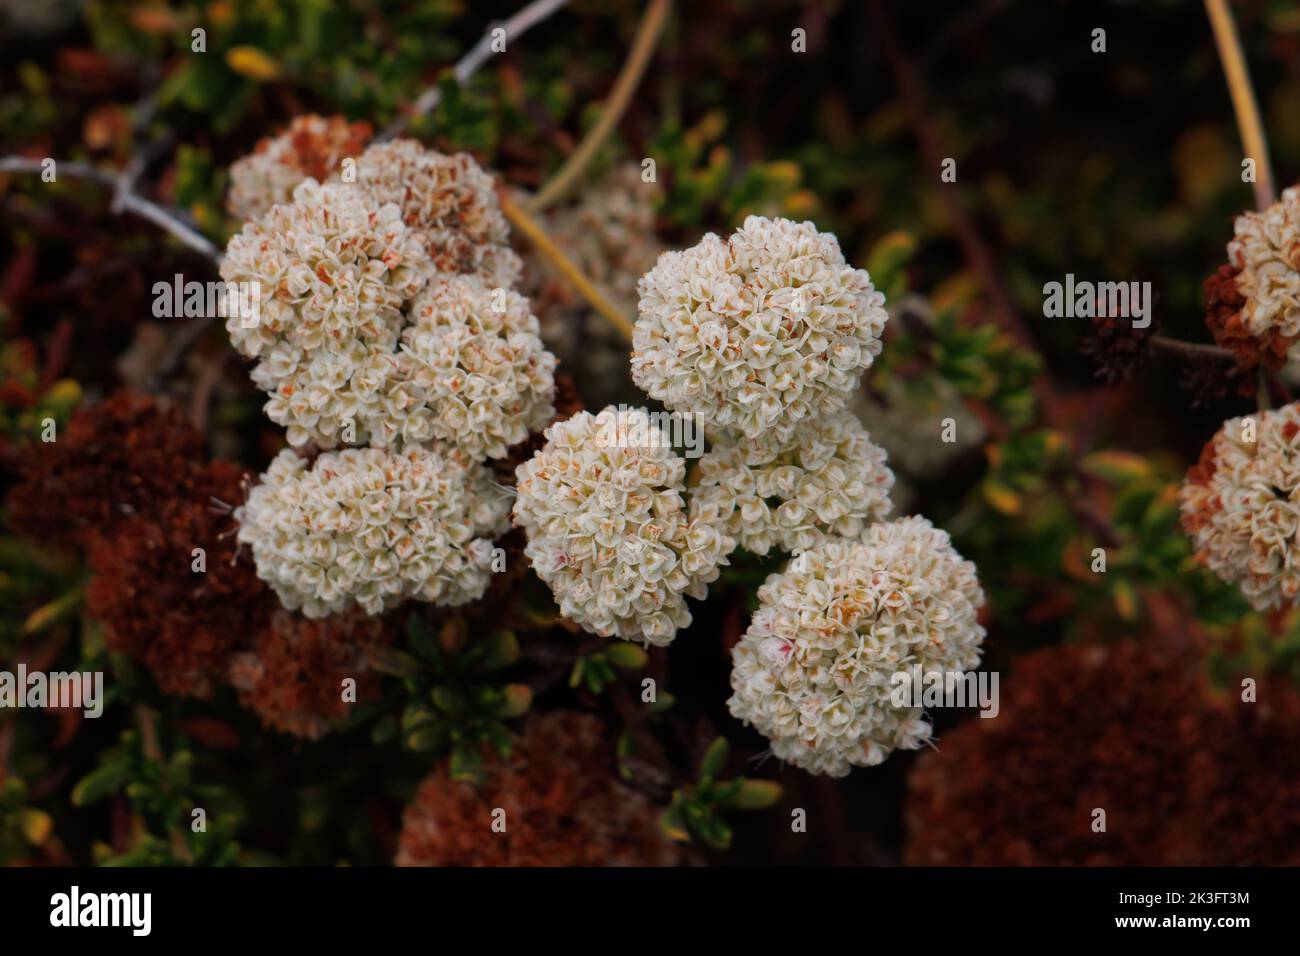 Fiore bianco testa di cimose infiorescenze di Eriogonum Fasciculatum varietà Fasciculatum, Polygonaceae, nativo sulla costa della contea di Ventura, estate. Foto Stock